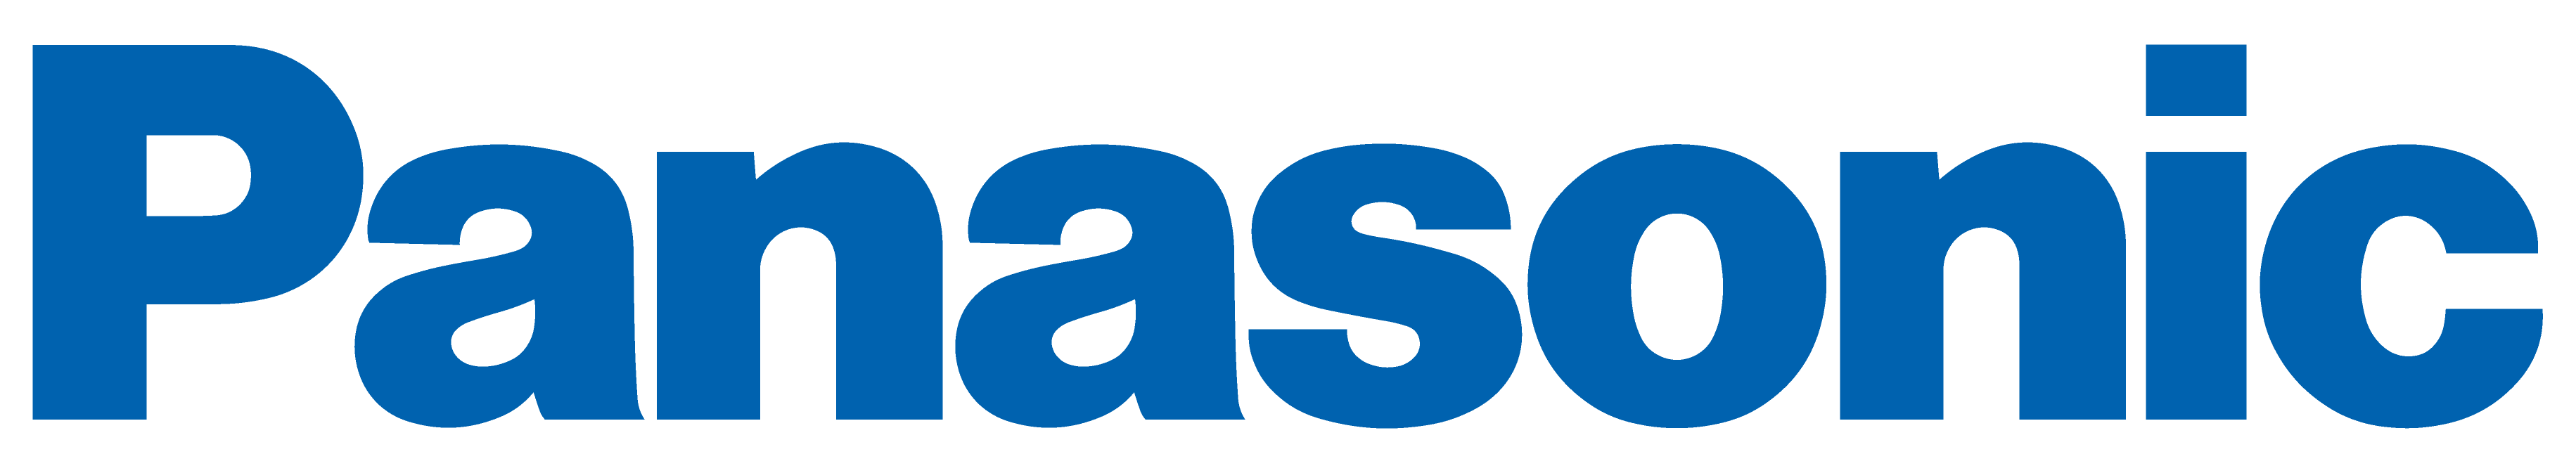 Panasonic logo colors